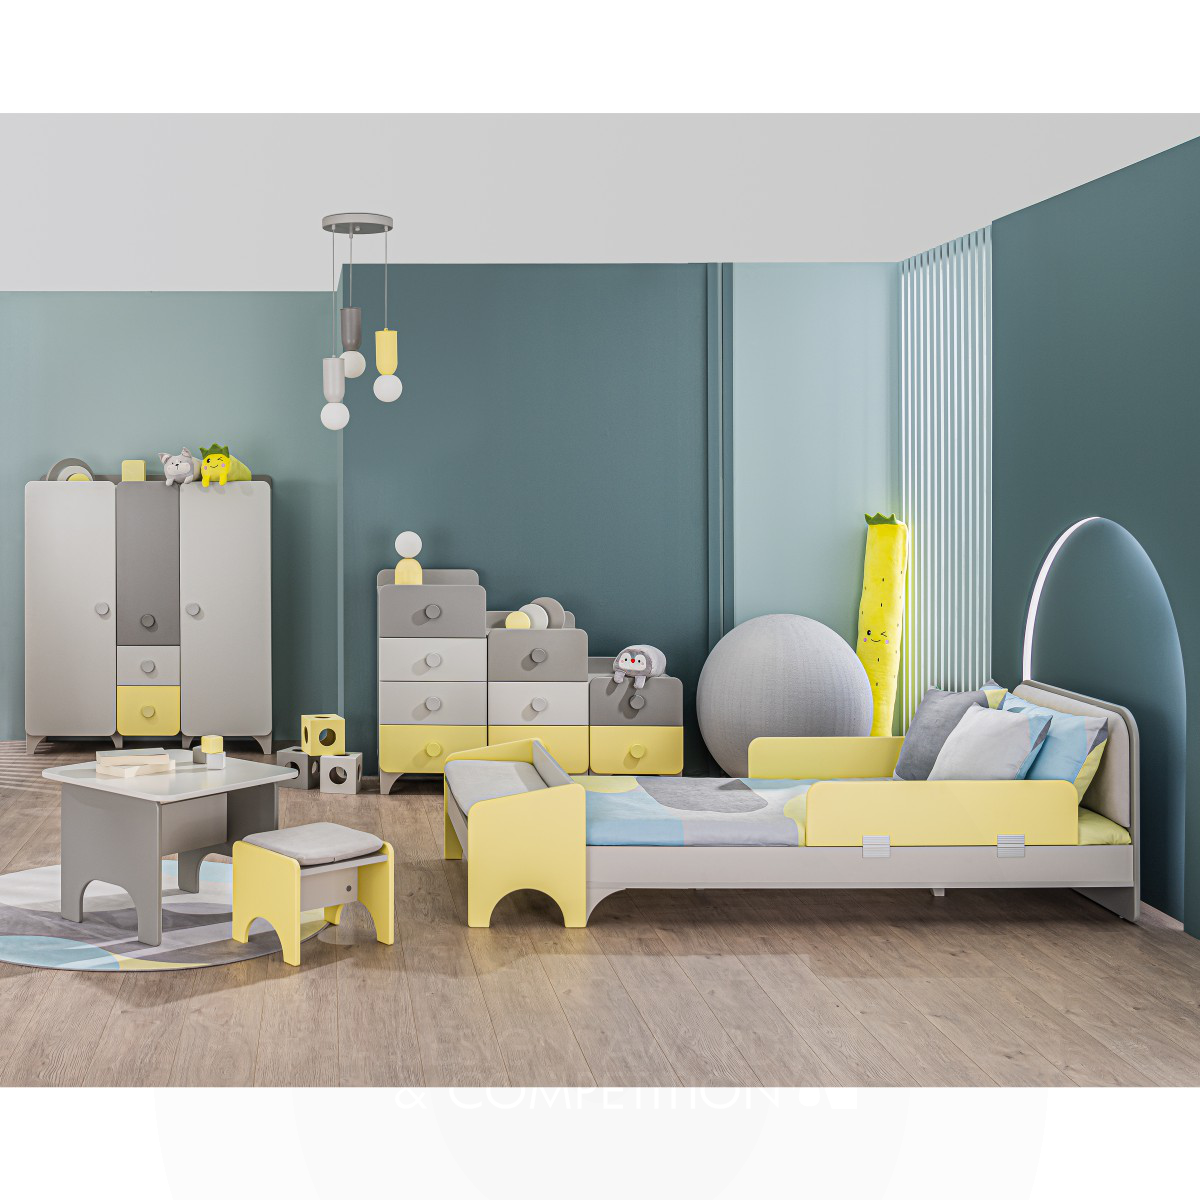 Minia Collection Child Room Furniture Set by Caploonba Design Team